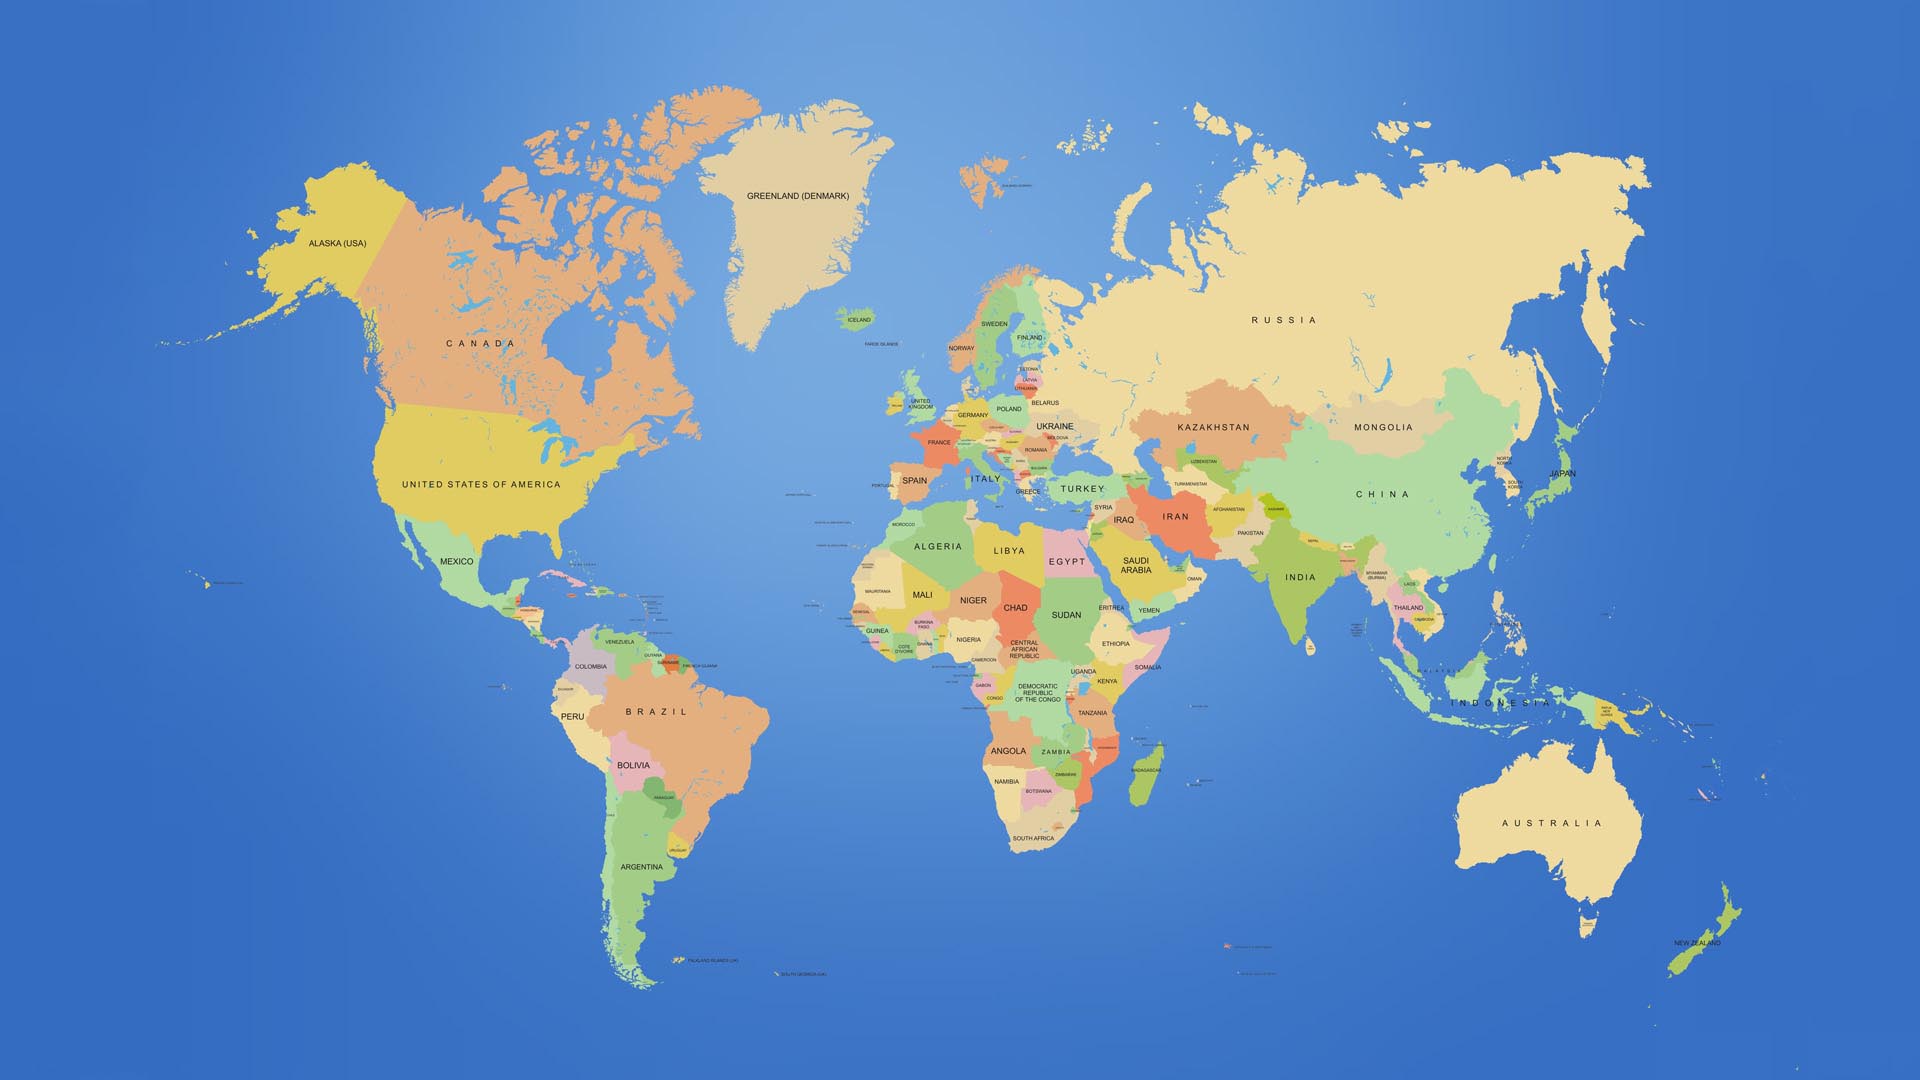 Free world atlas map download